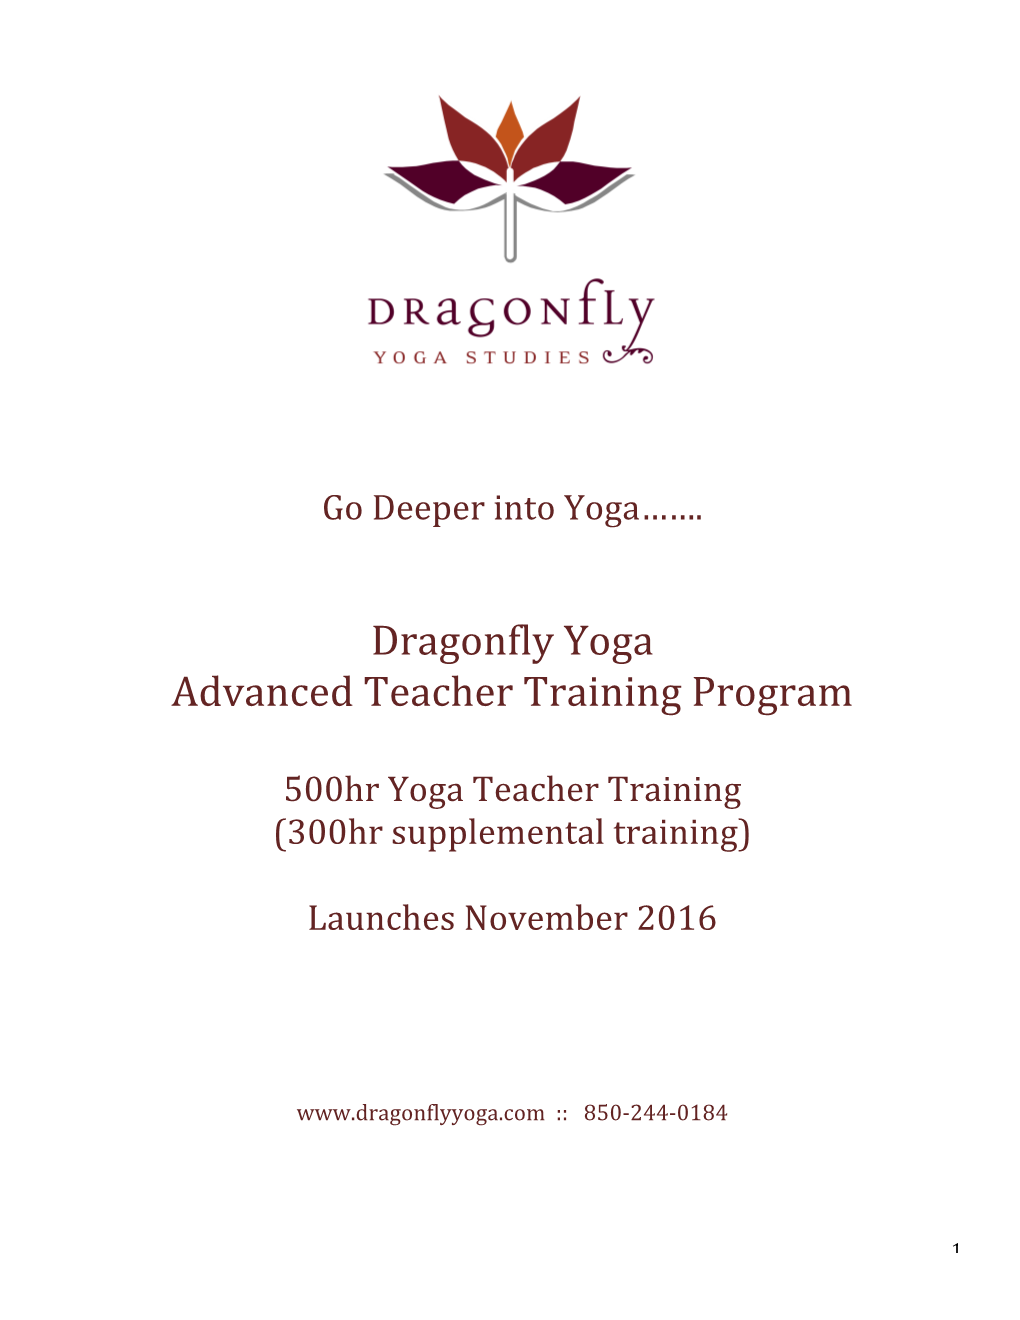 Dragonfly Yoga Advanced Teacher Training Program